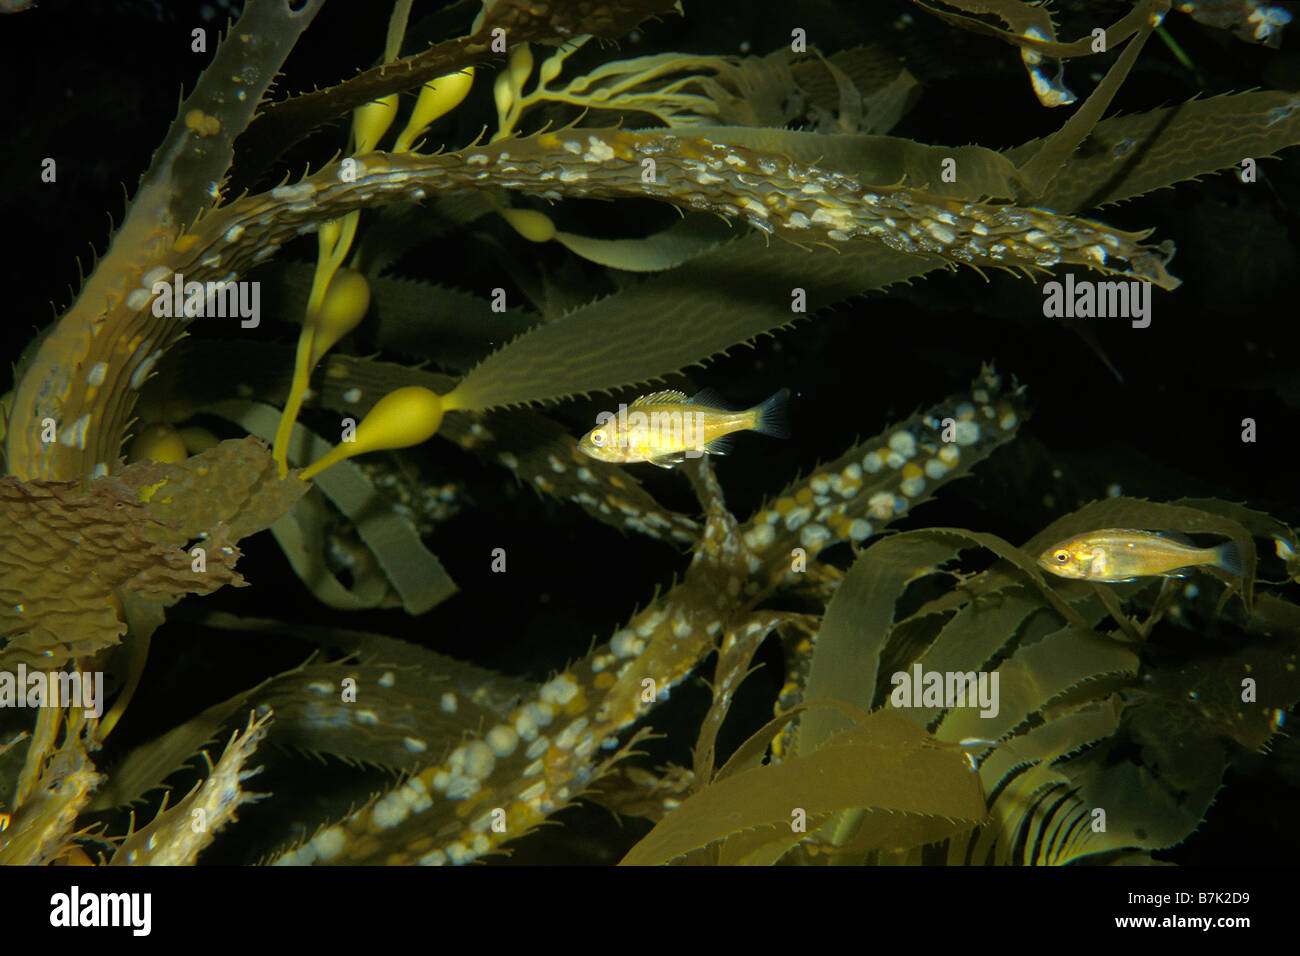 Juvenile rockfish Sebastes sp in Giant kelp California Pacific Ocean Stock Photo